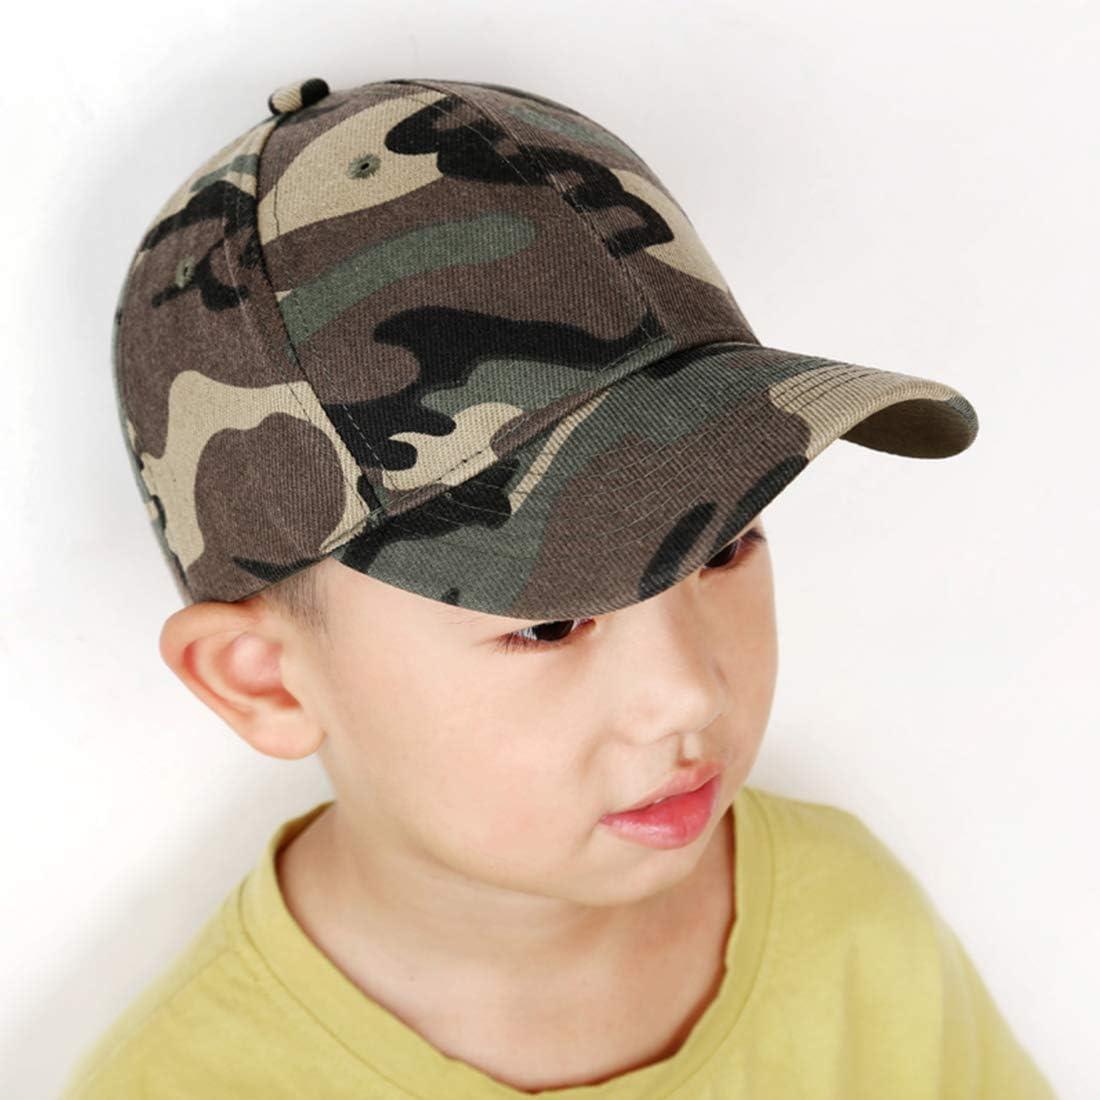 American Trends Toddler Baseball Hat for Toddler Boy Kids